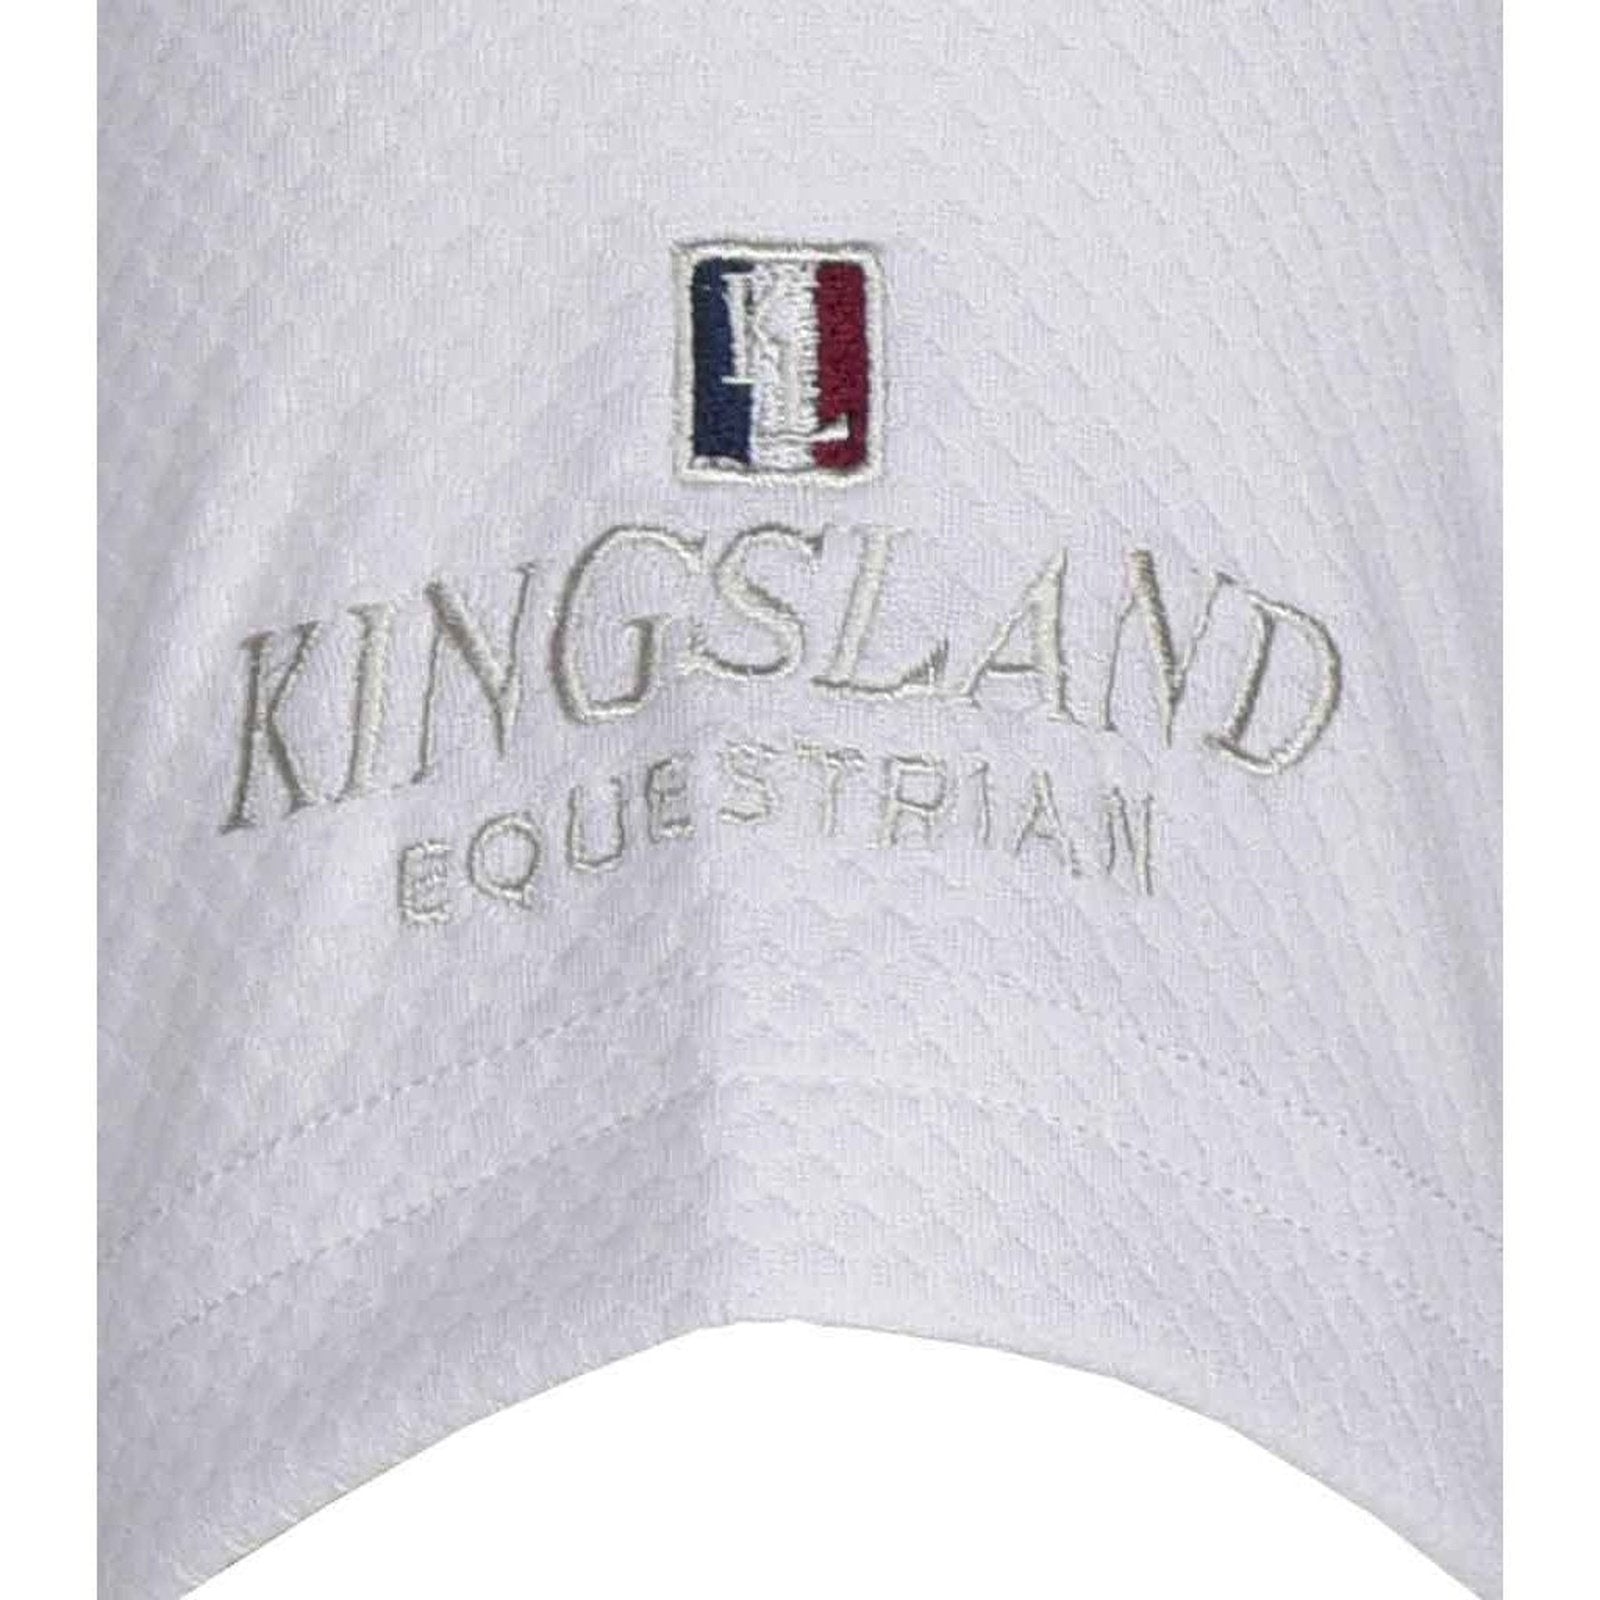 Kingsland Classic Kurzärmliges Turniershirt für Mädchen Gr.110-164cm in weiß bei SP-Reitsport Kingsland bei SP-Reitsport